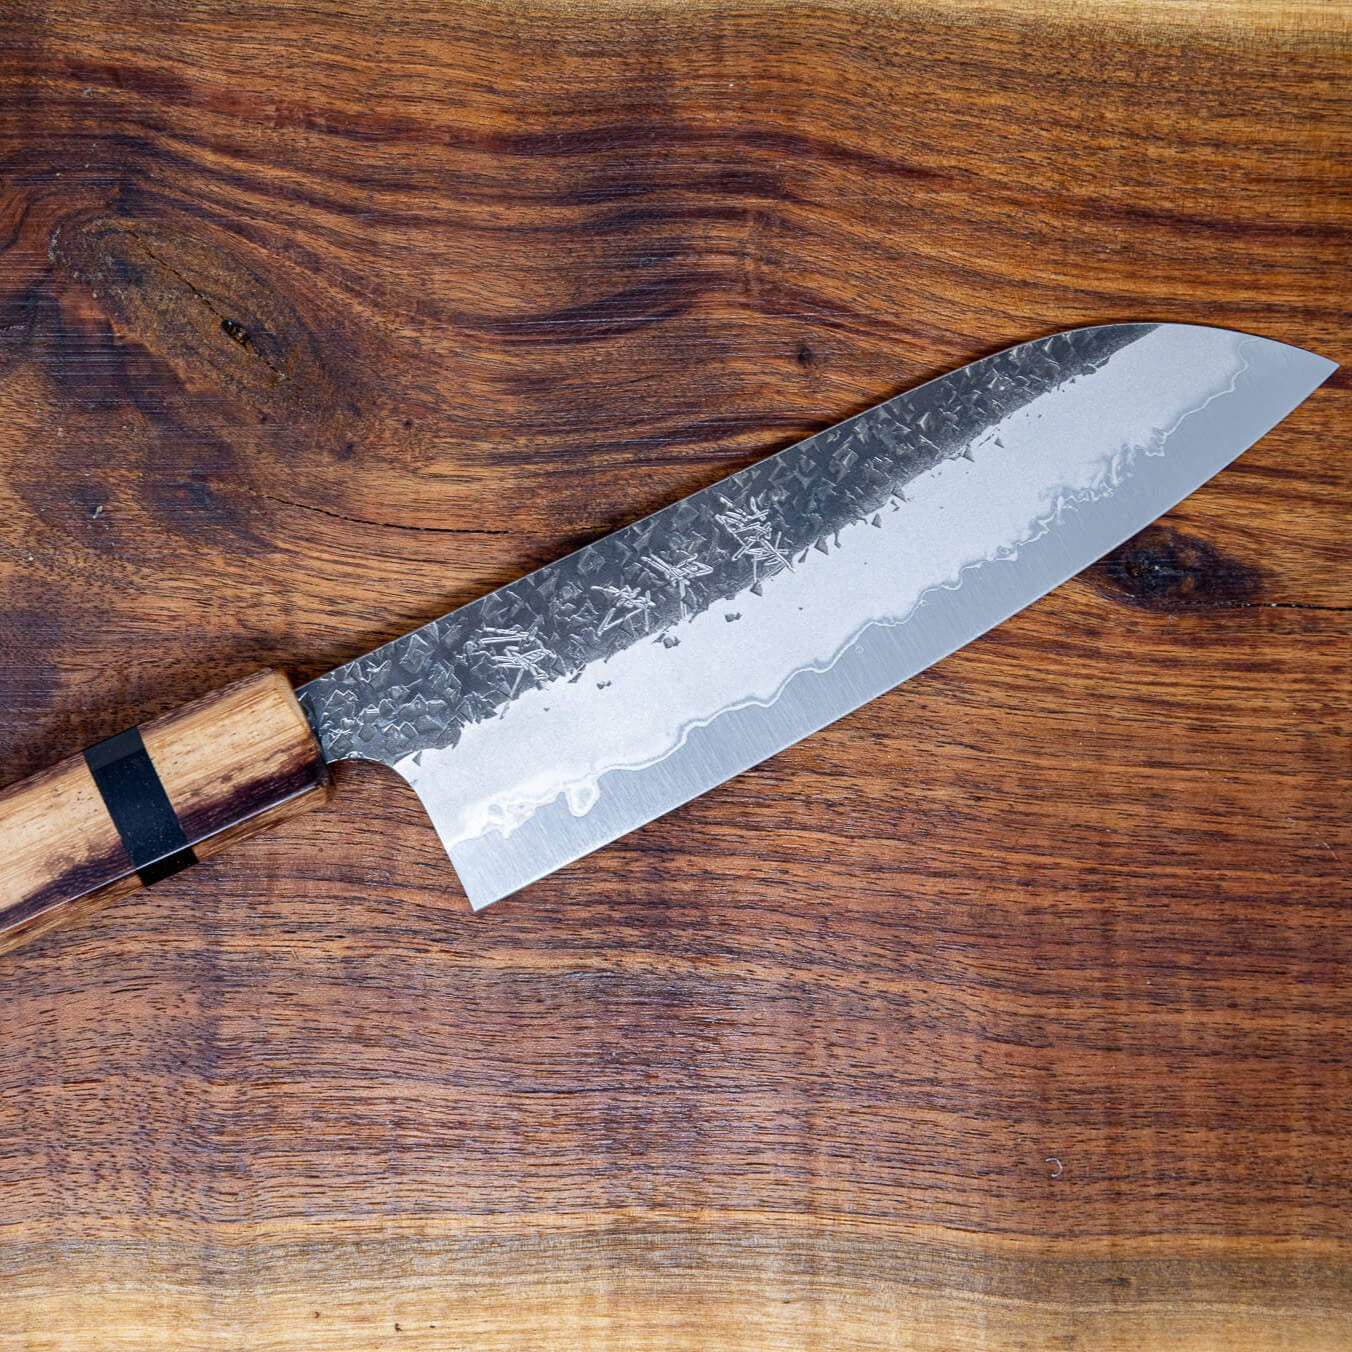 Japanese Chef Knife 7" Bunkabocho/Santoku